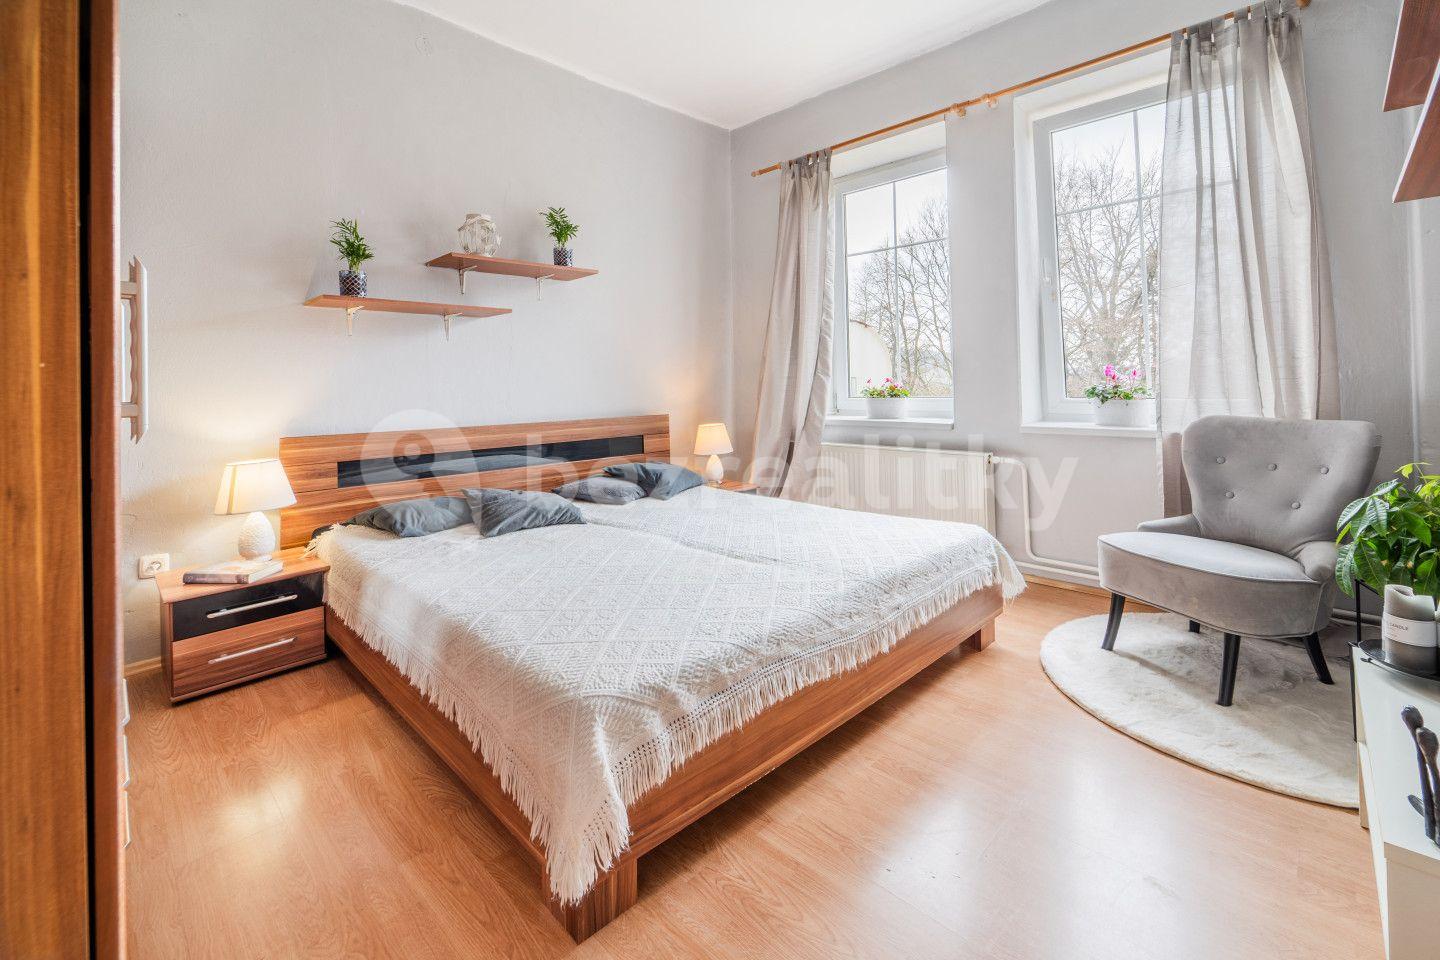 3 bedroom flat for sale, 71 m², Na Svahu, Jablonec nad Nisou, Liberecký Region